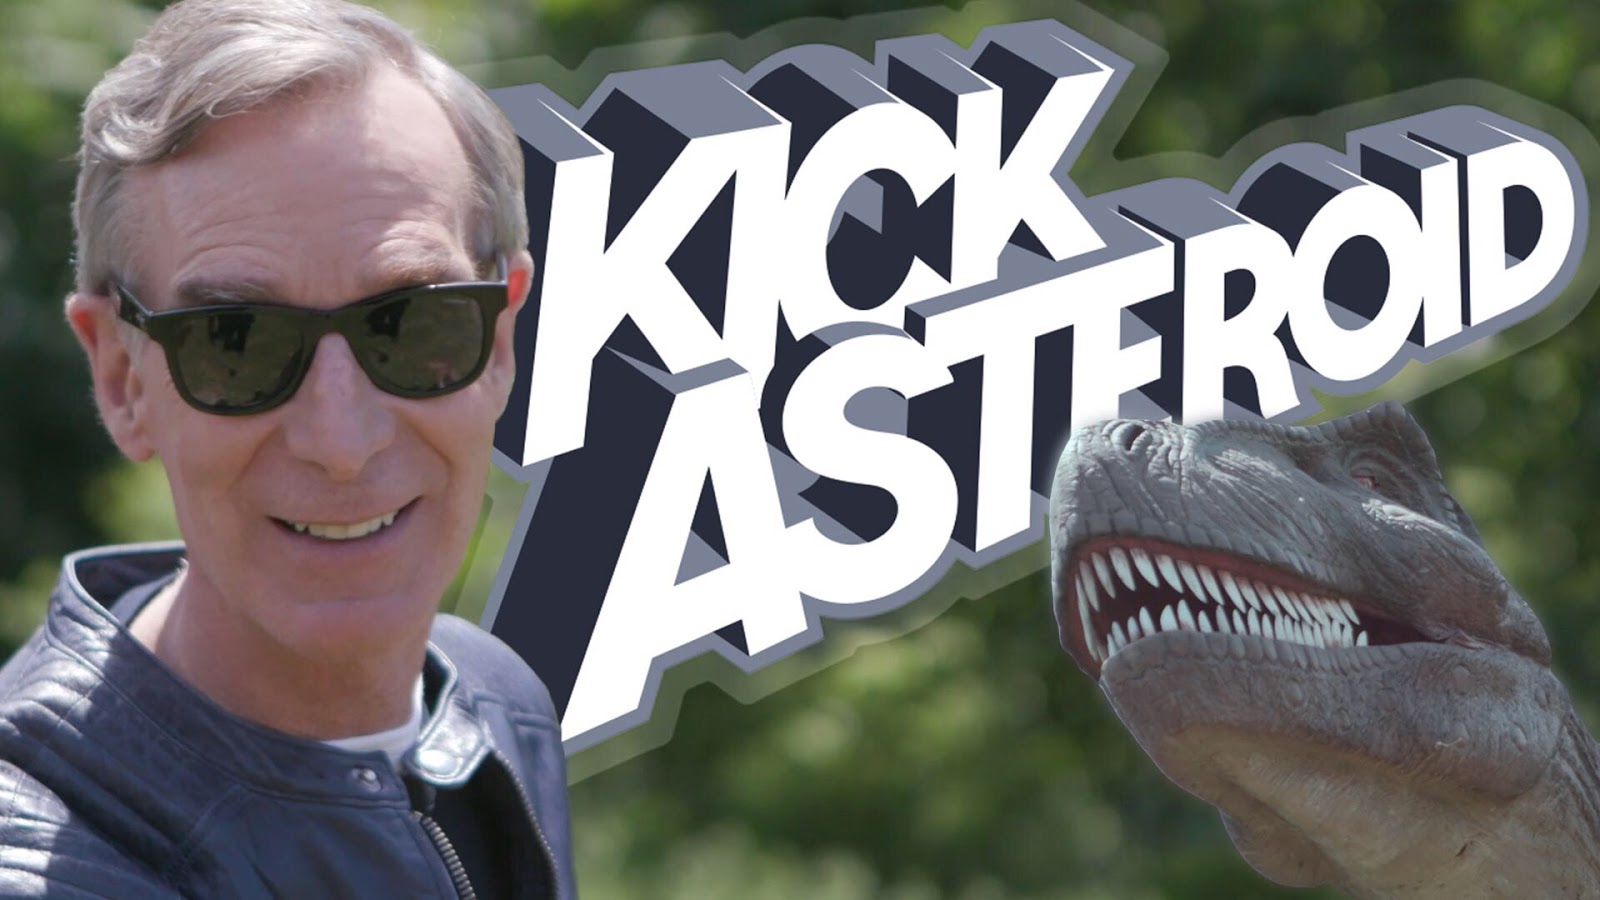 kick asteroid with Bill Nye